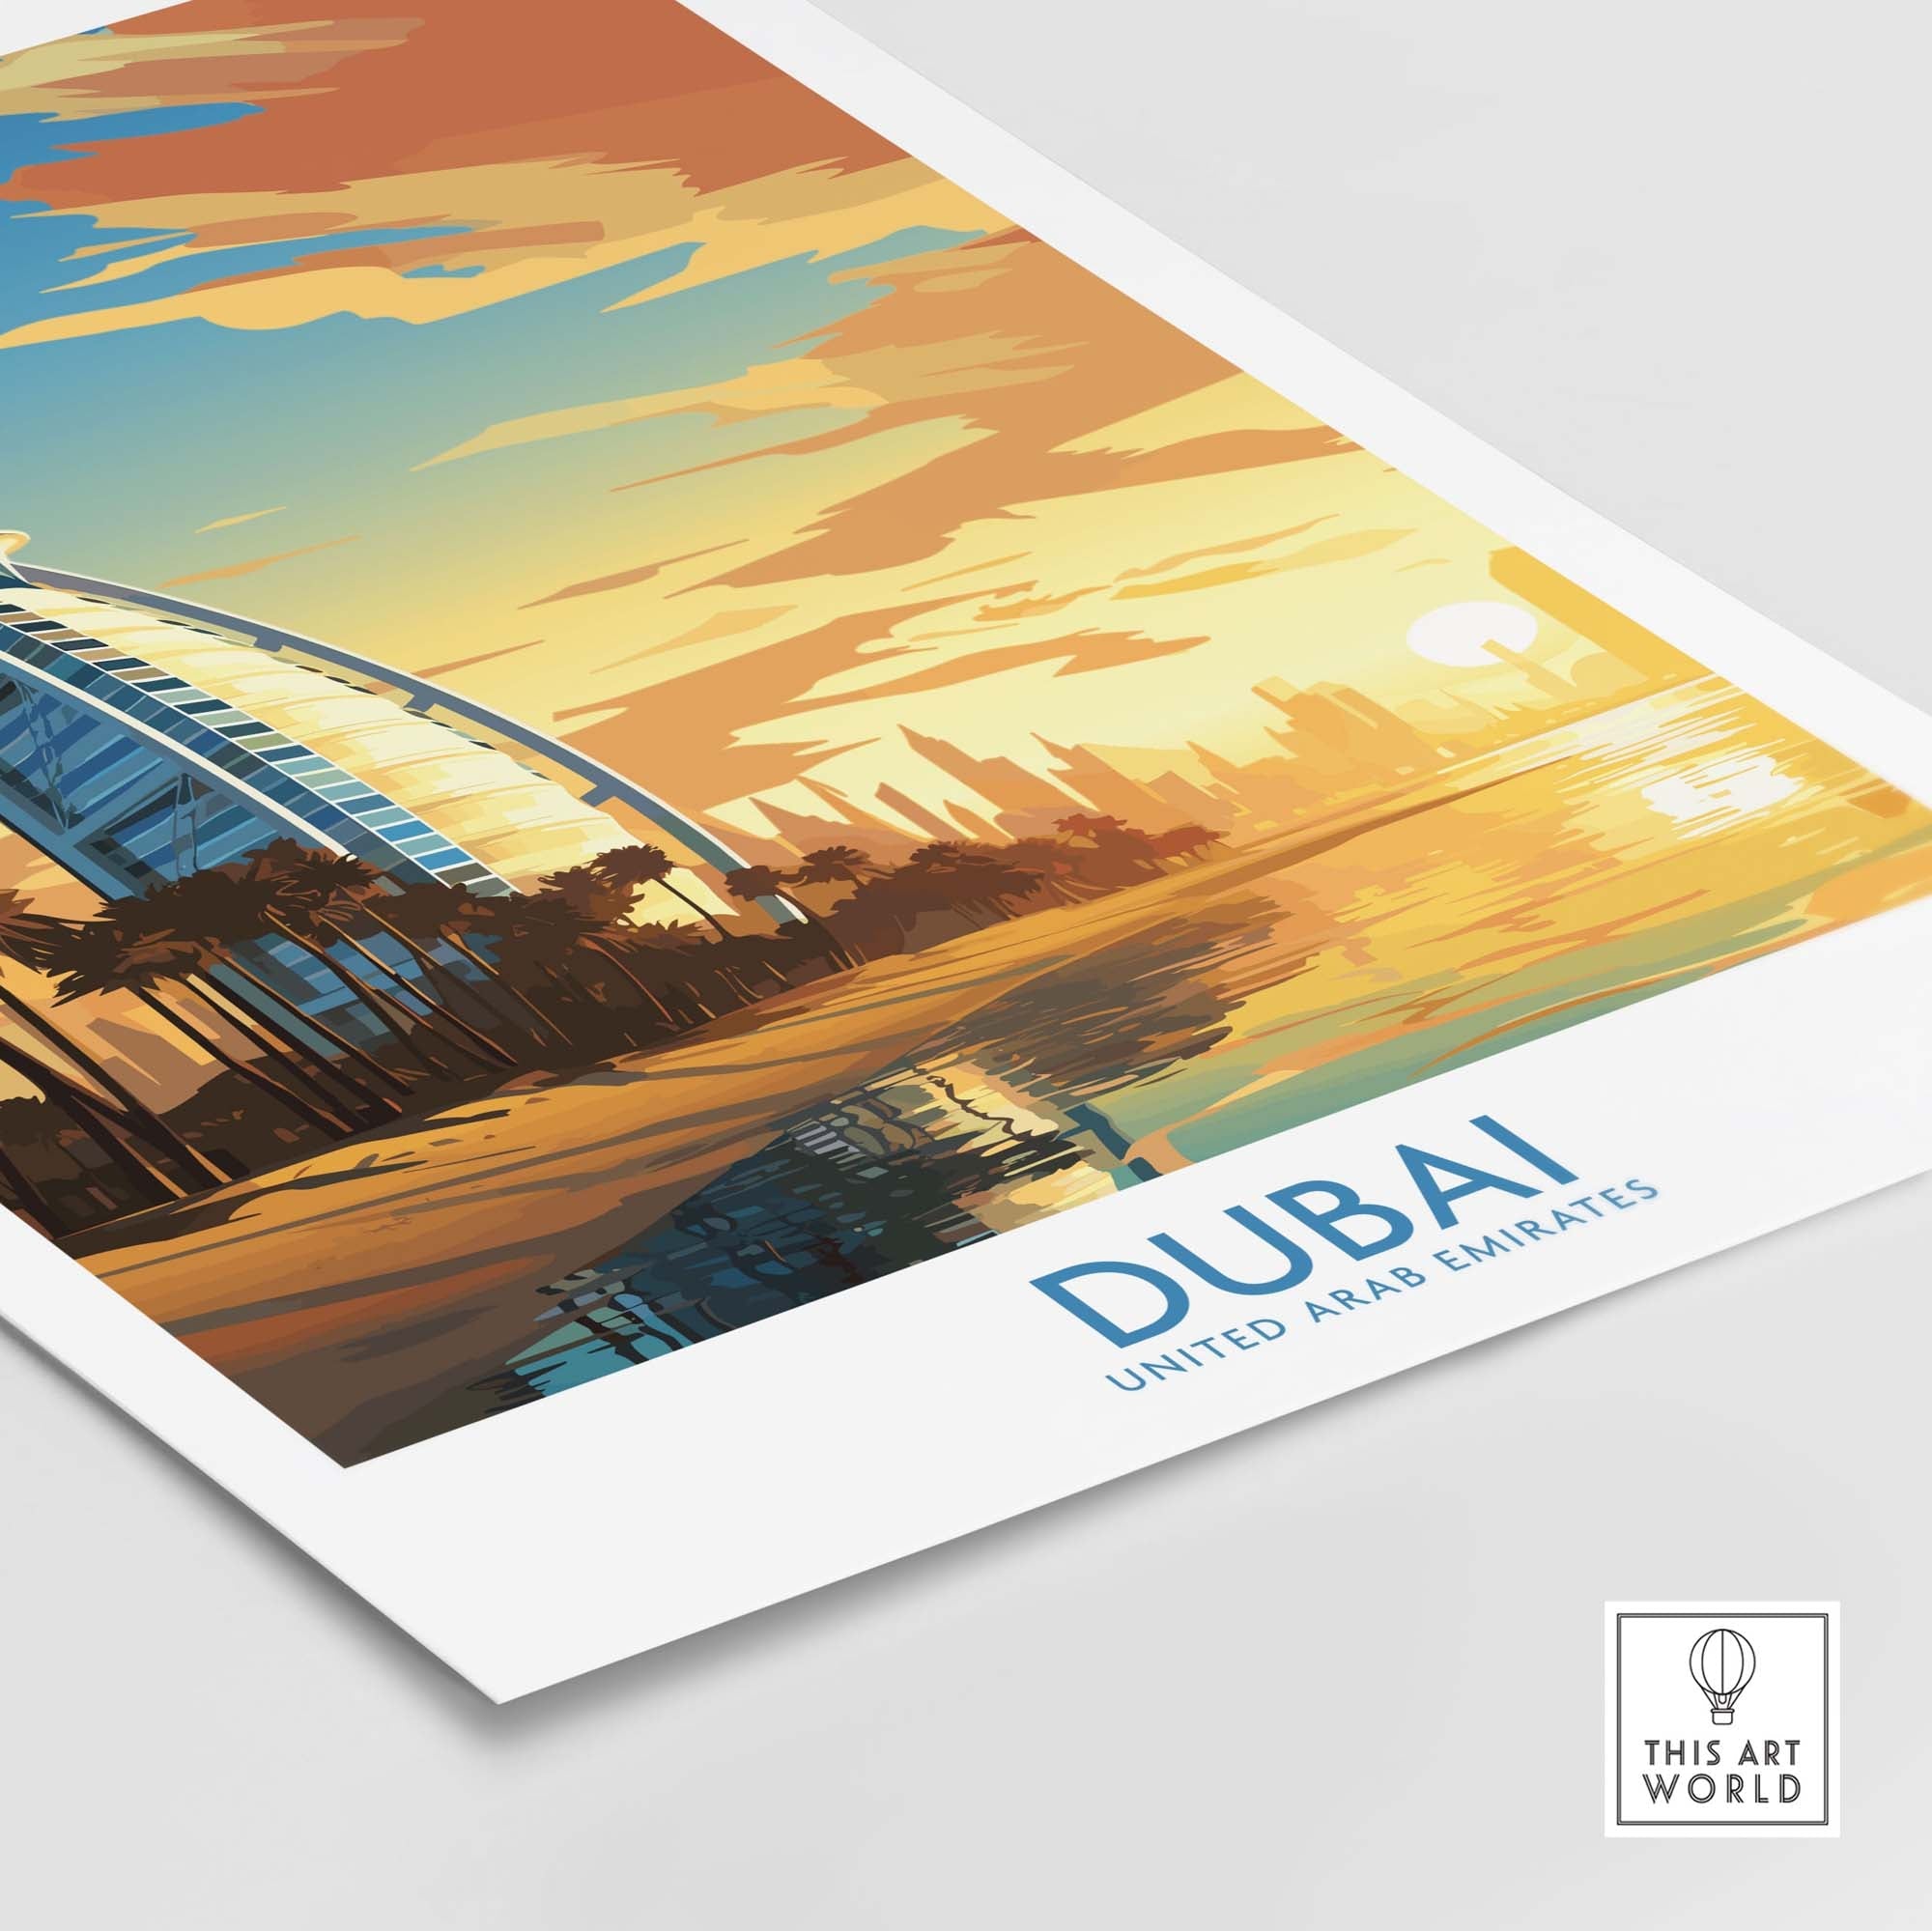 Dubai Print